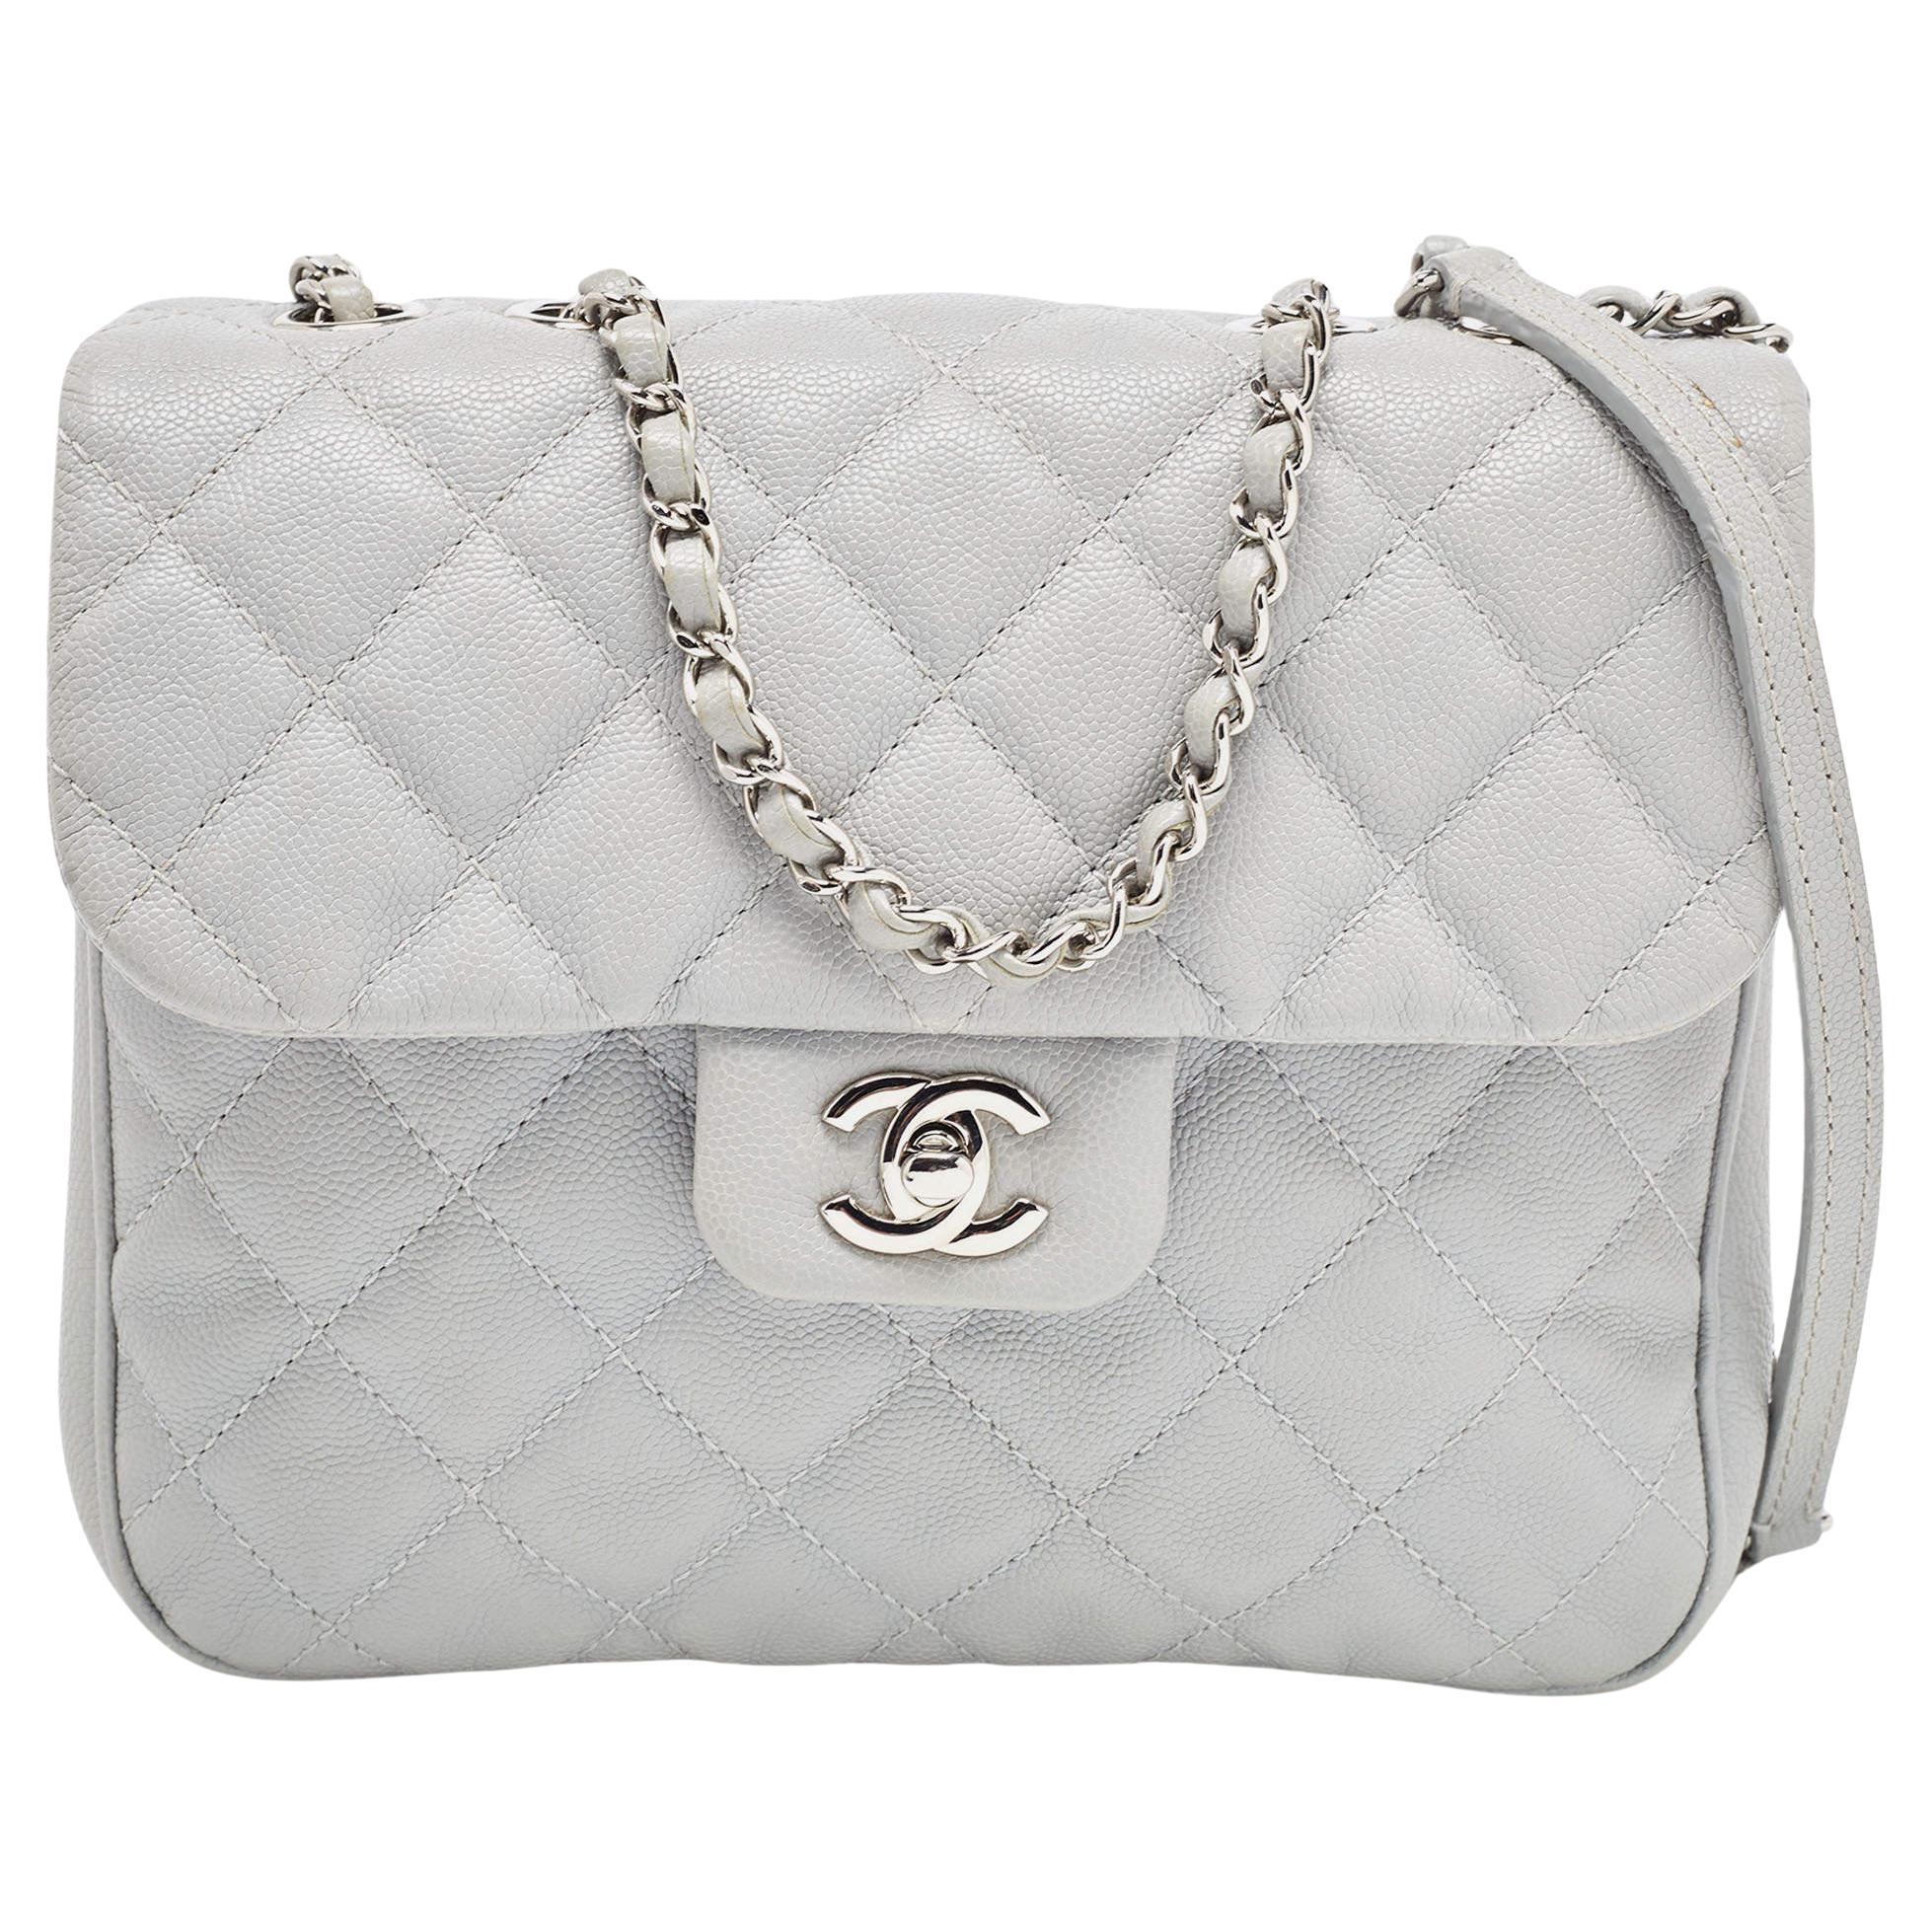 Chanel Grey Caviar Leather Medium Urban Companion Flap Bag For Sale